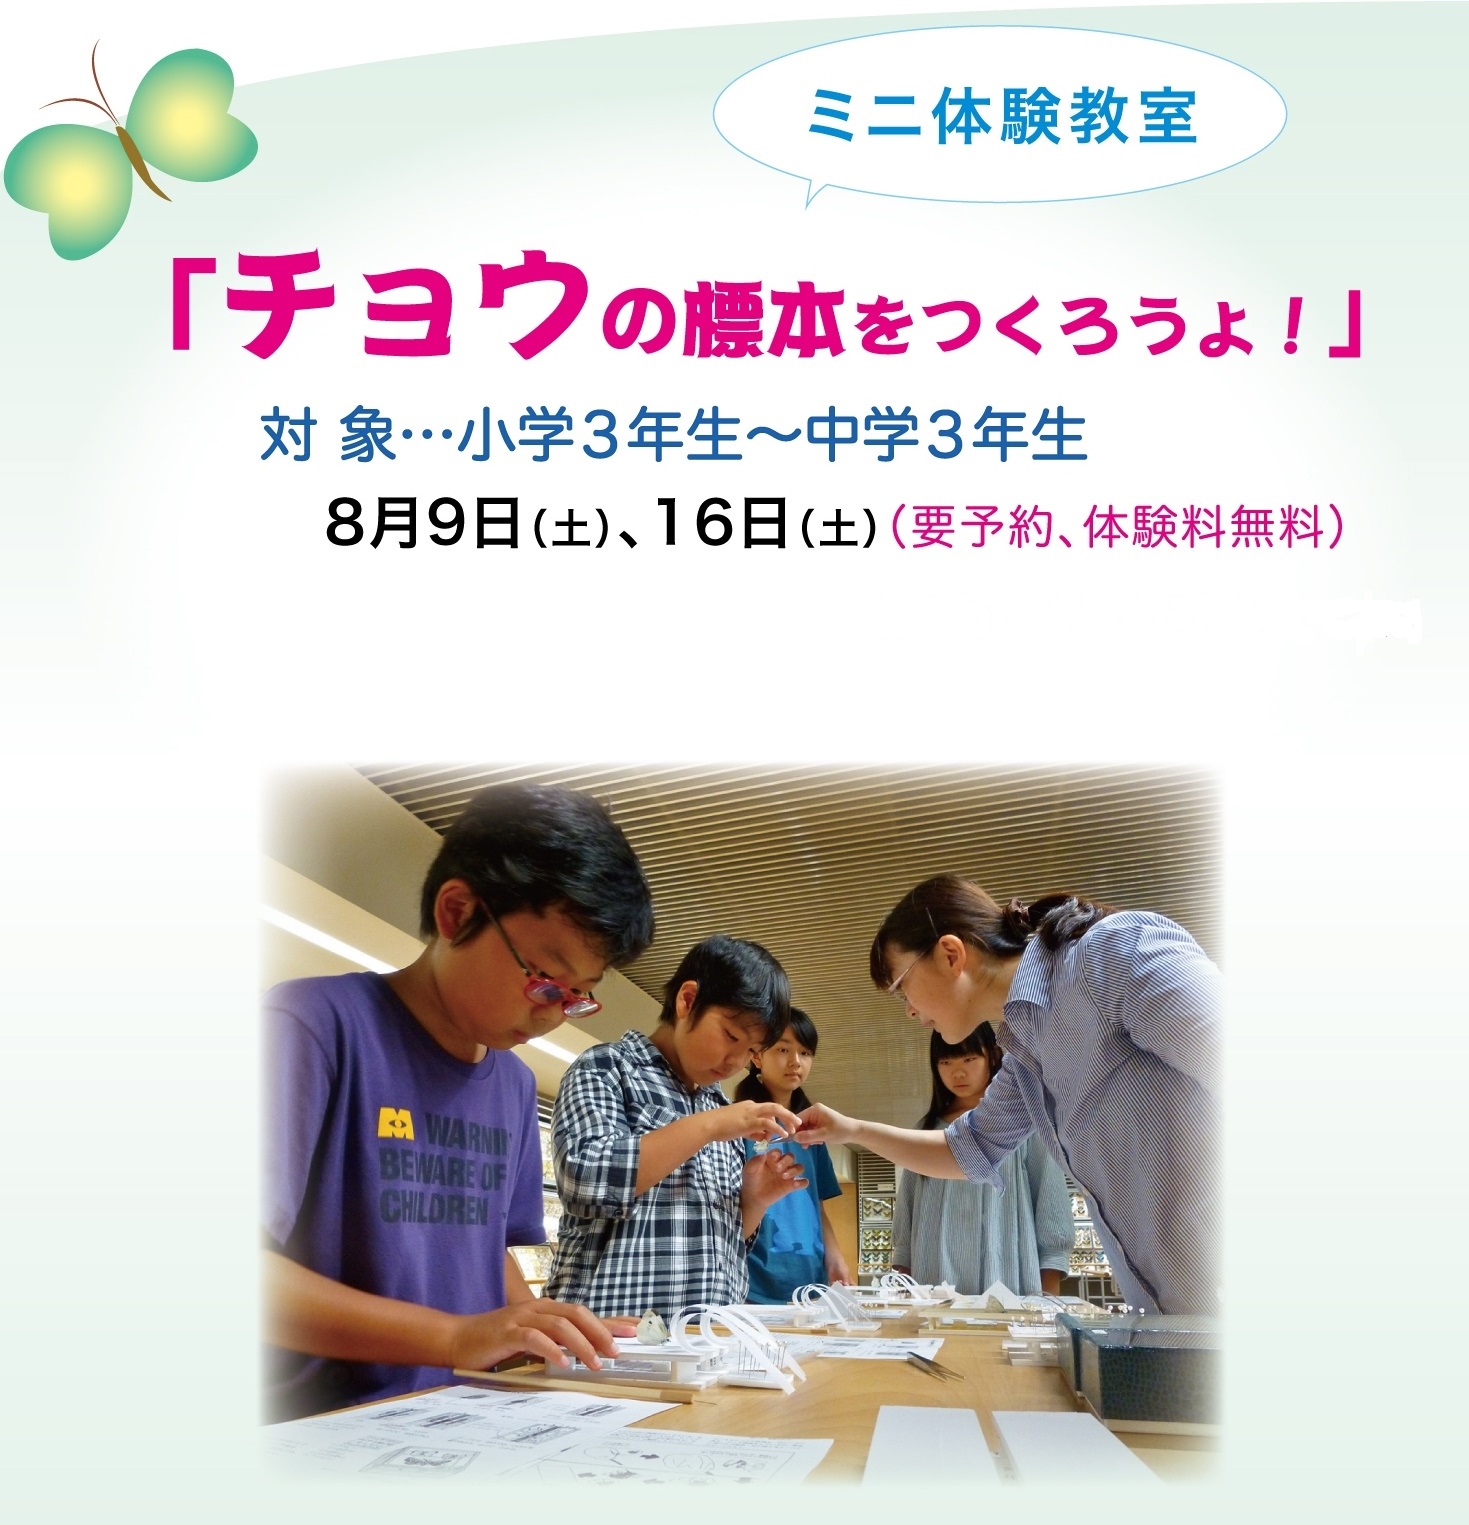 http://www.kameimuseum.or.jp/topics/2014/07/09/%E3%83%81%E3%83%A9%E3%82%B7%E8%9D%B6.jpg